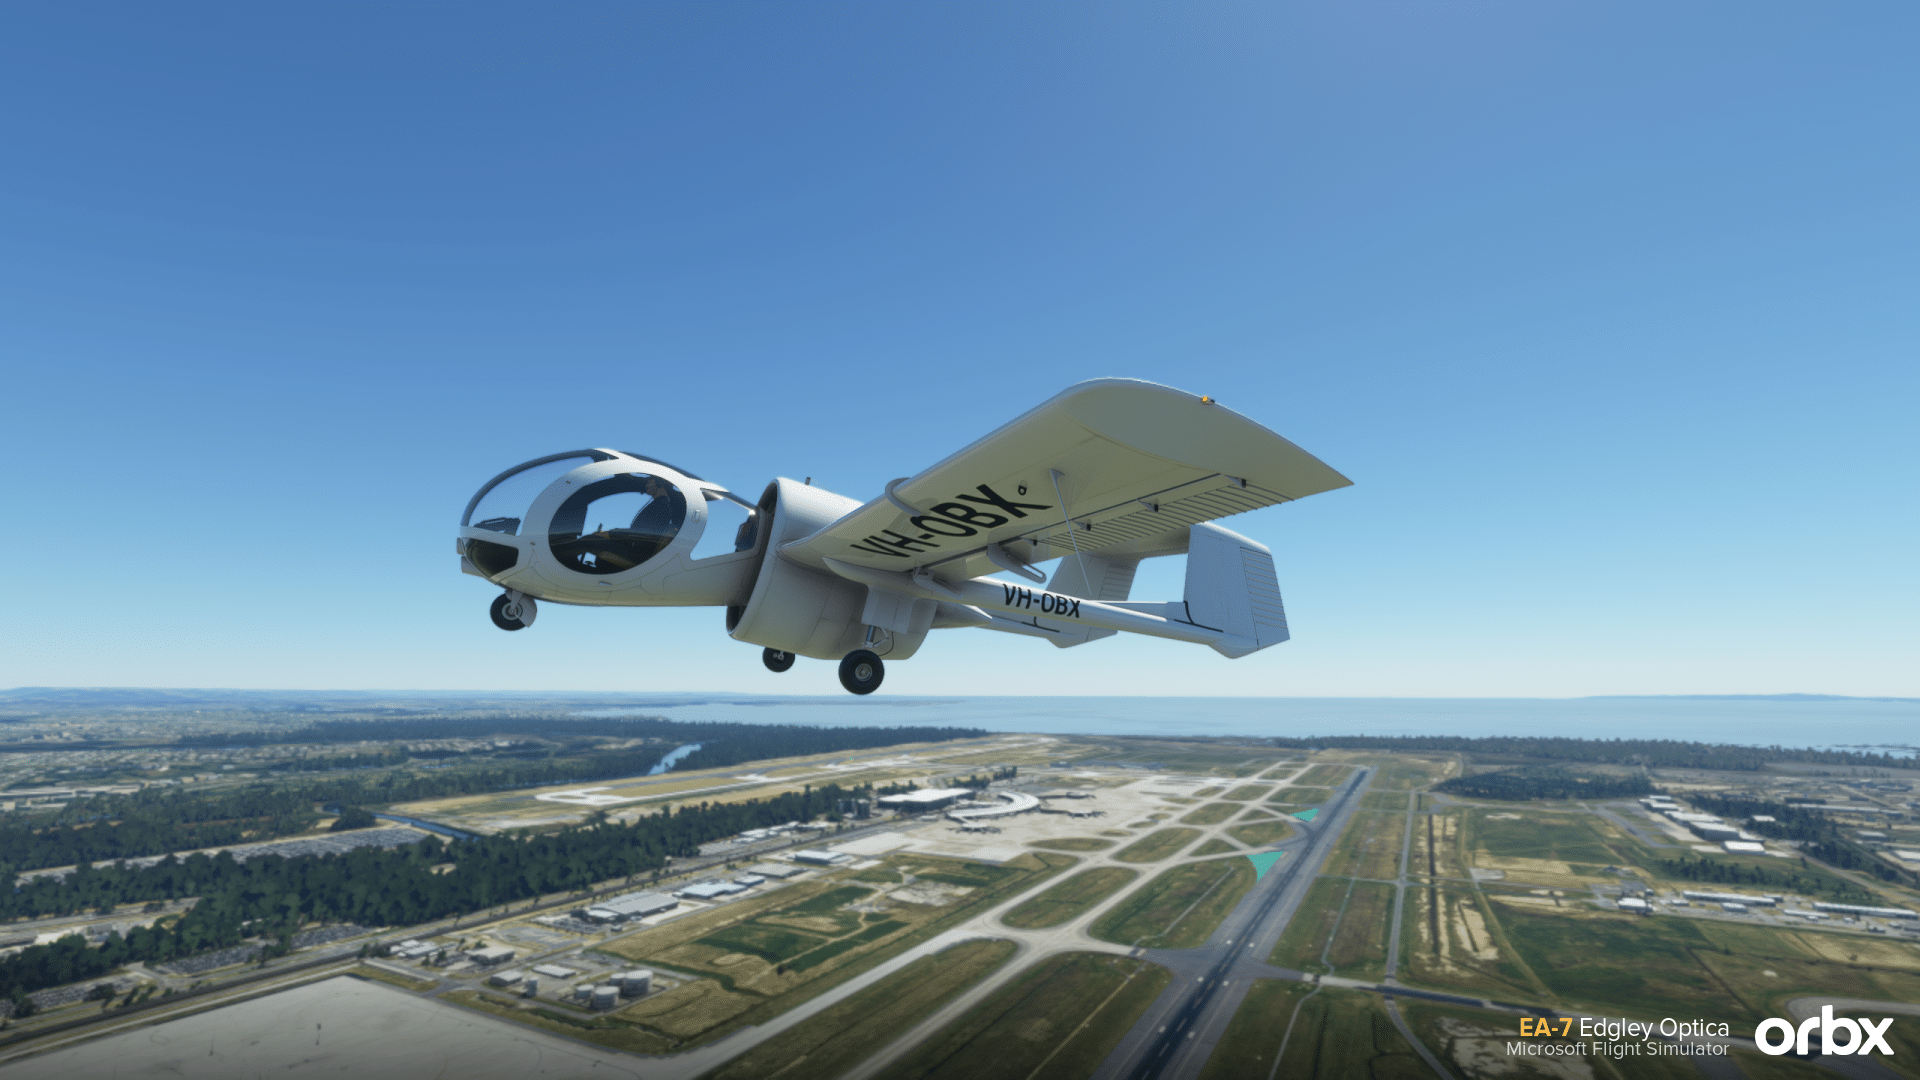 Orbx Publishes 2021 Product Roadmap - Microsoft Flight Simulator, Orbx, Prepar3D, X-Plane